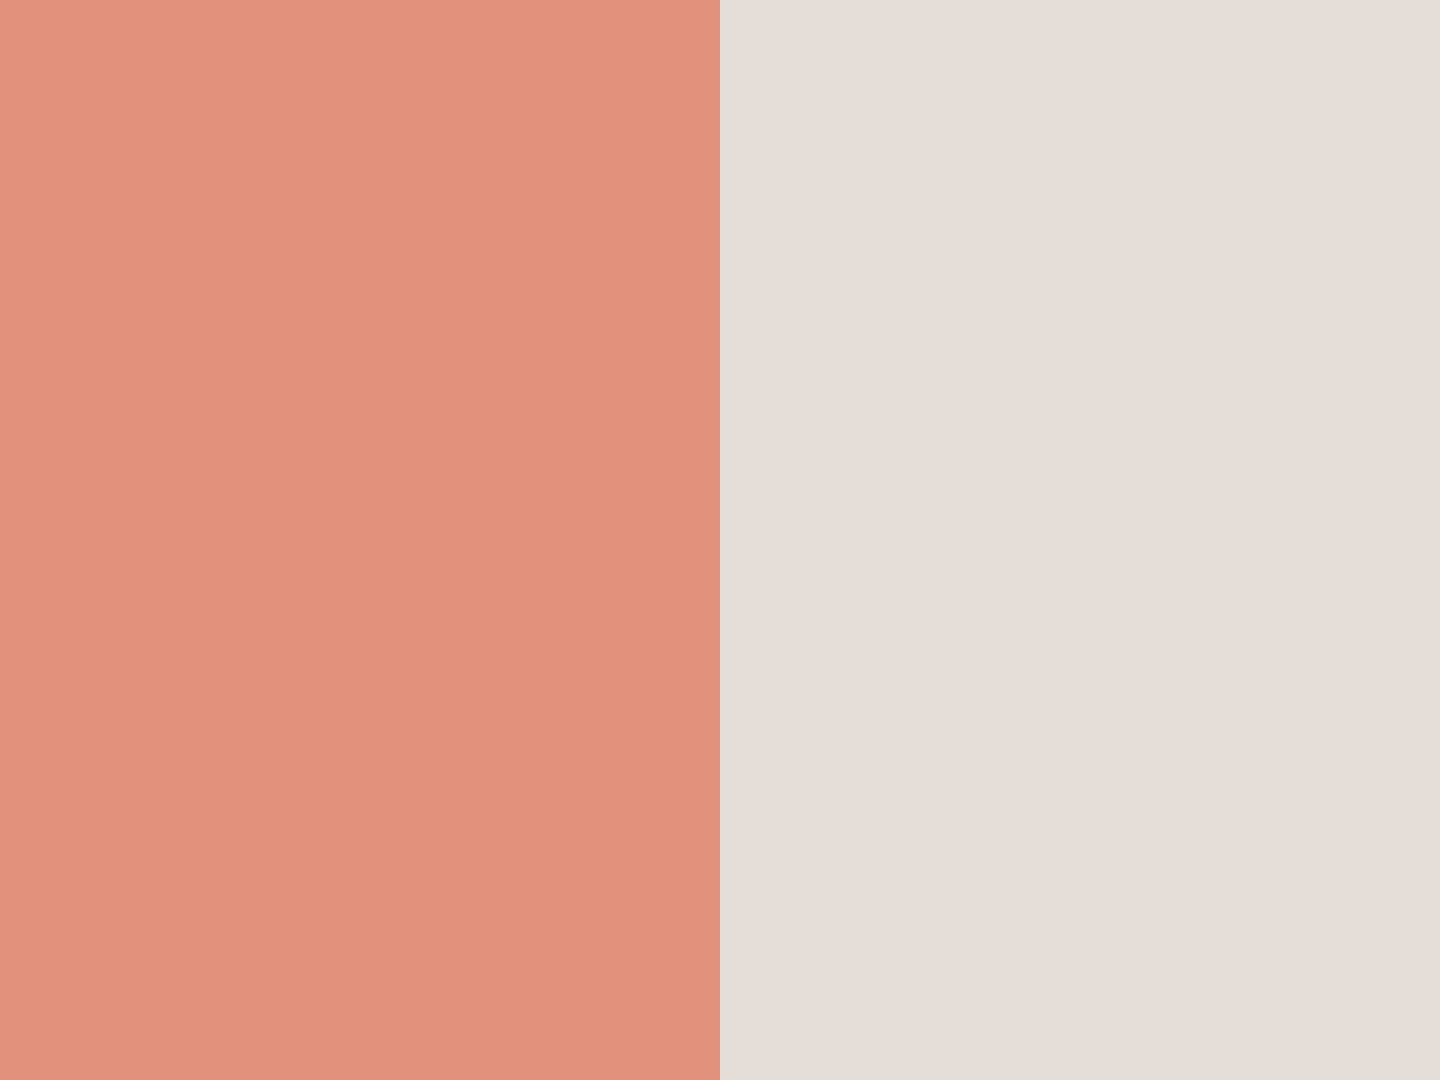 rngott Tvenne - Pink Terracotta / Seashell Beige